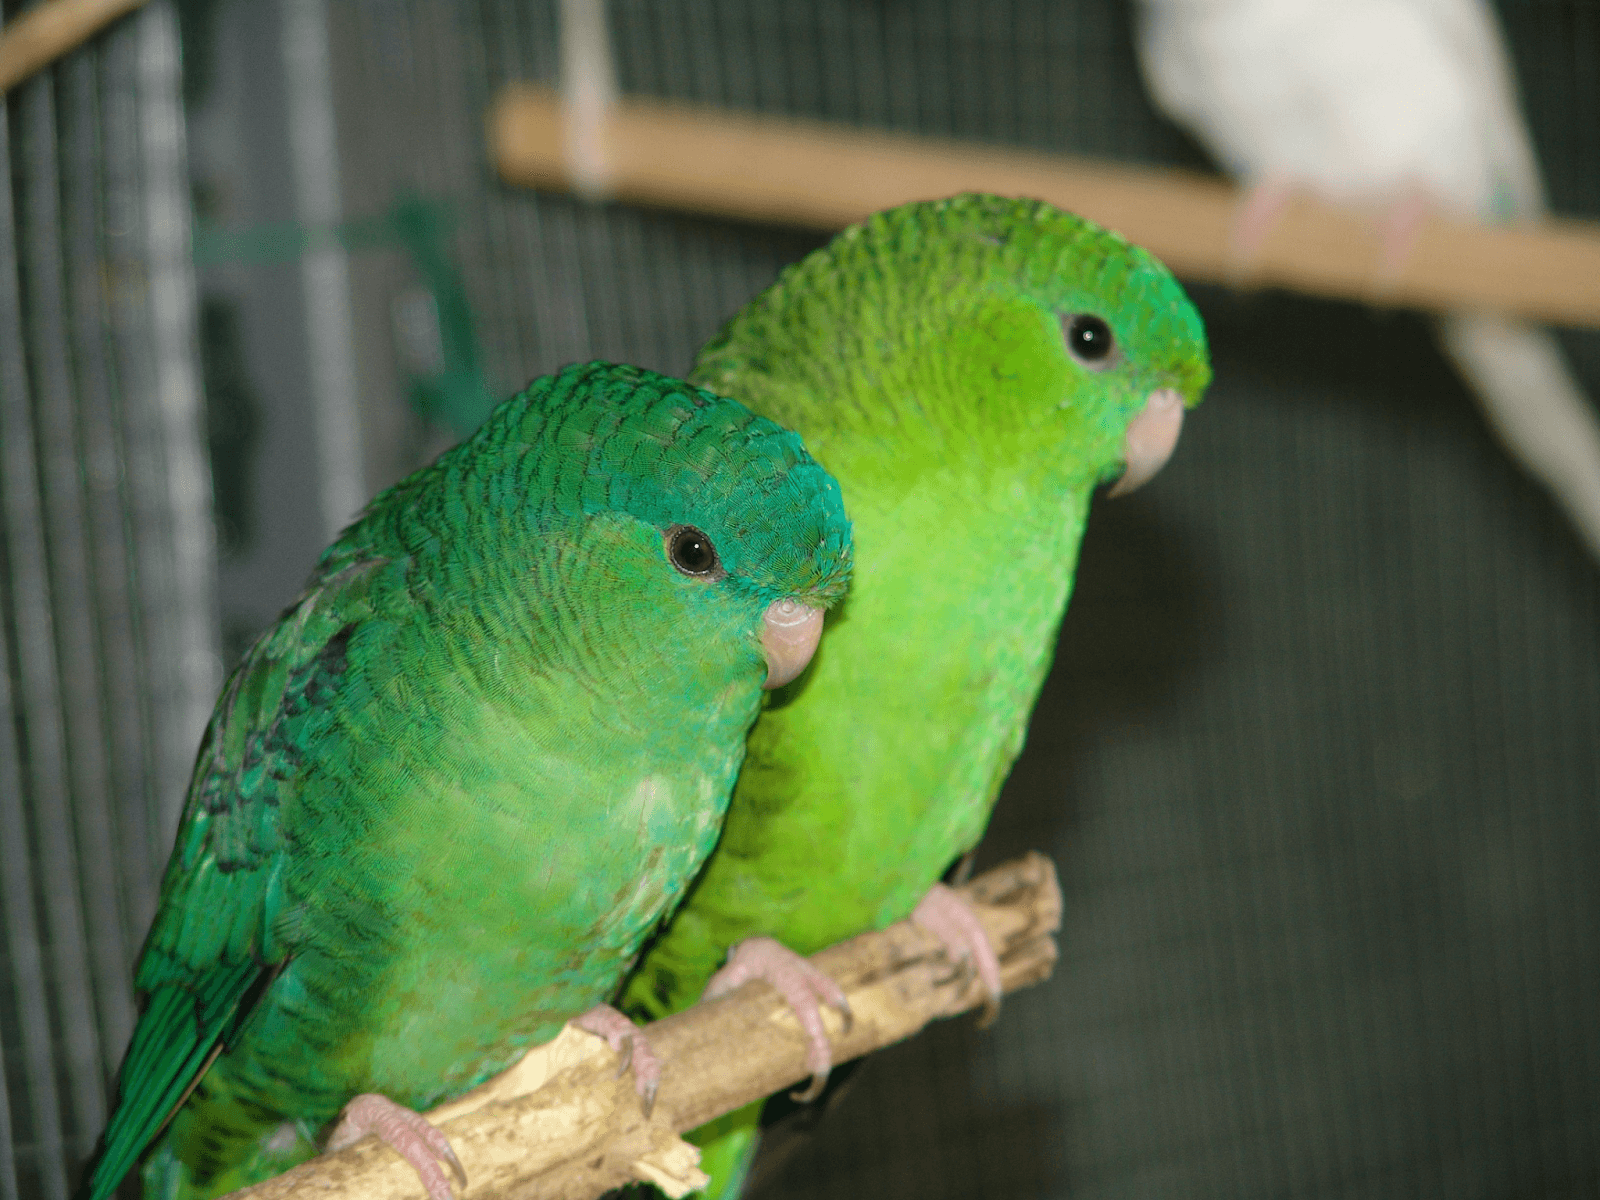 Barred parakeet (Bolborhyncus Lineola)